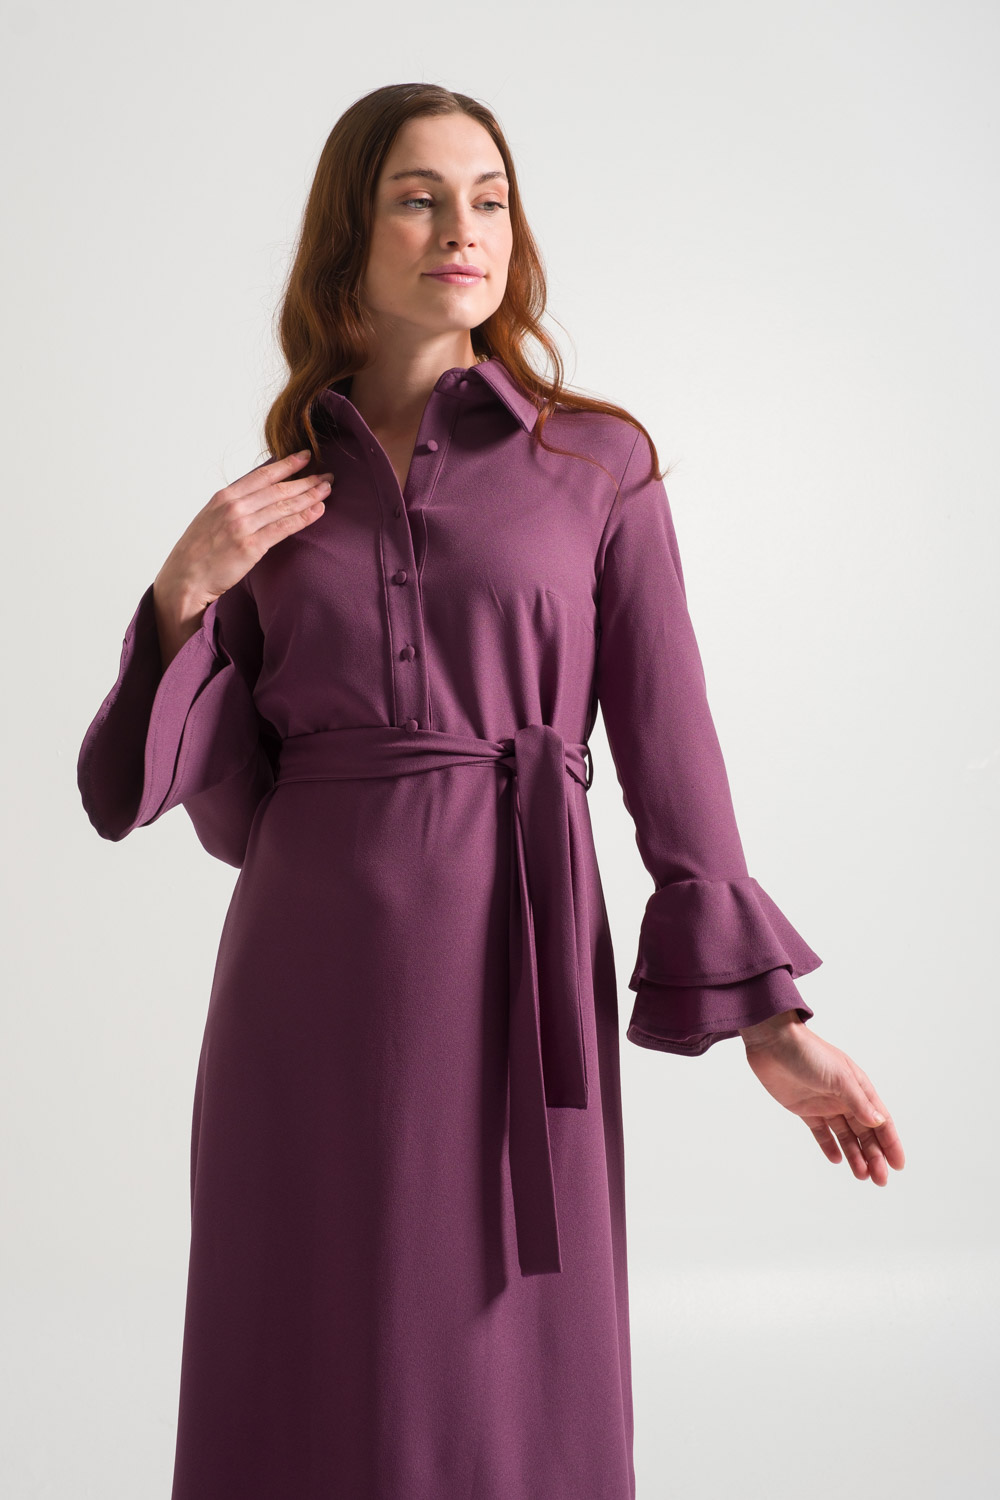 Flywheel Sleeve Purple Dress with Collars